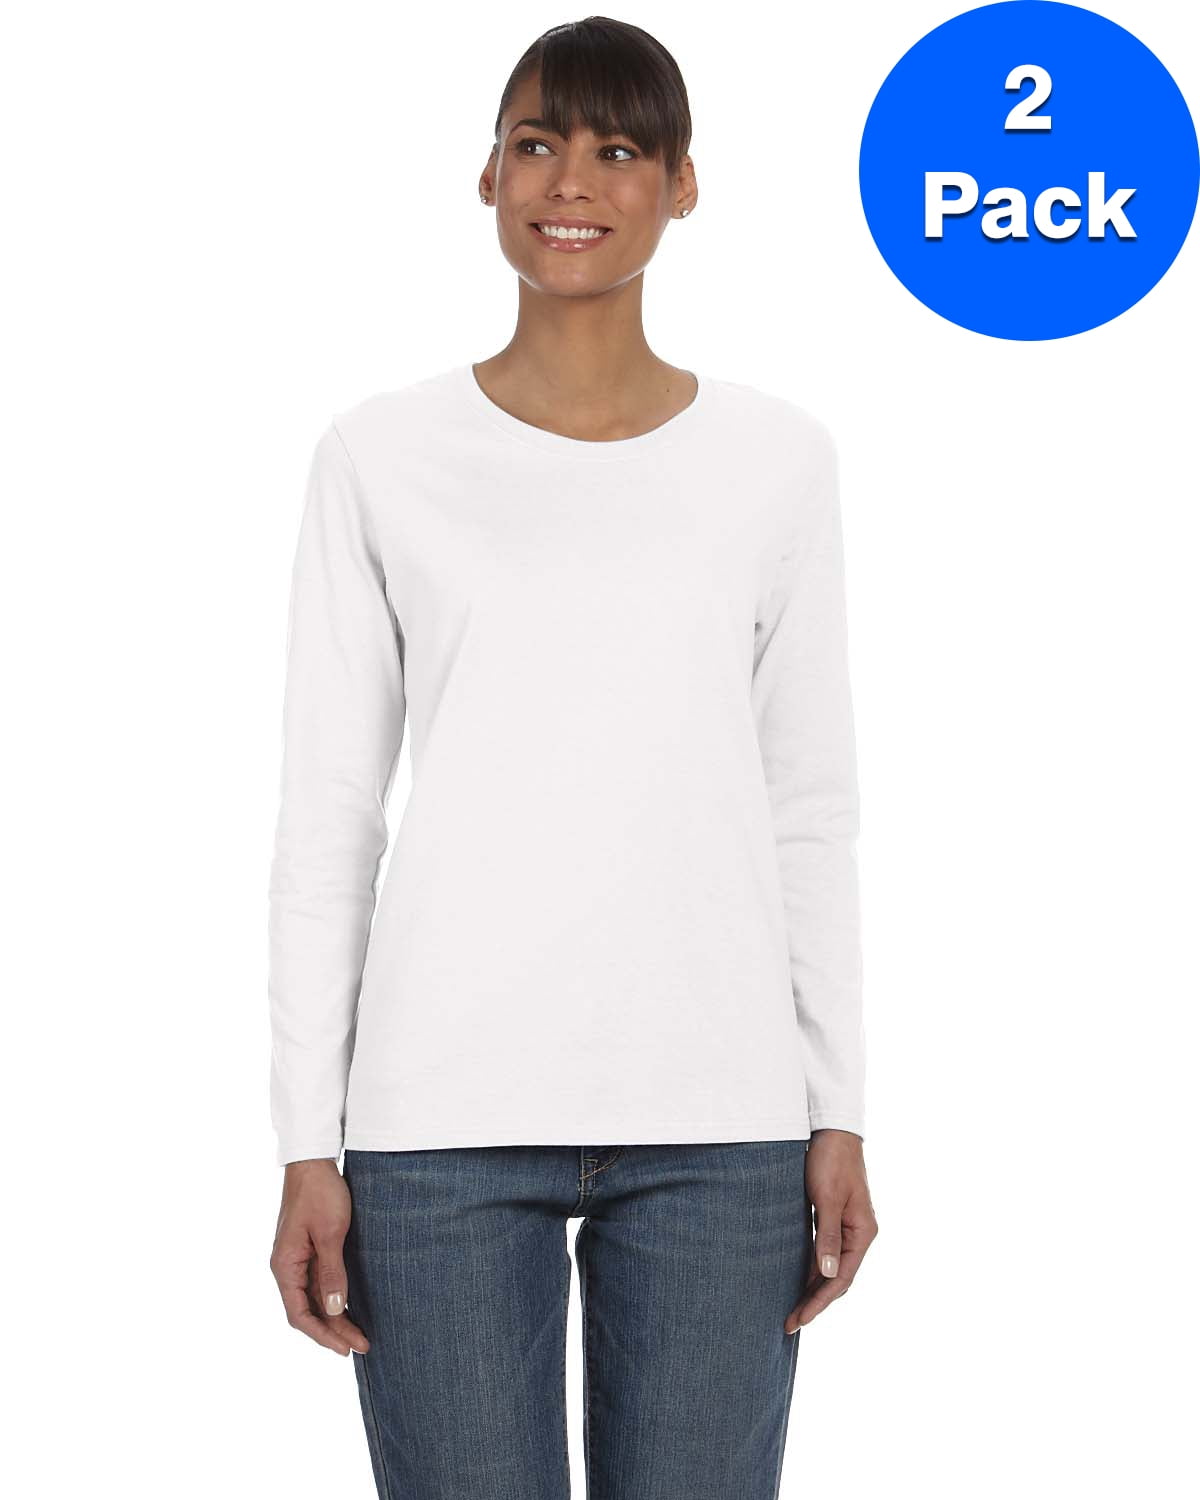 Womens Heavy Cotton Missy Fit Long-Sleeve T-Shirt 2 Pack - Walmart.com